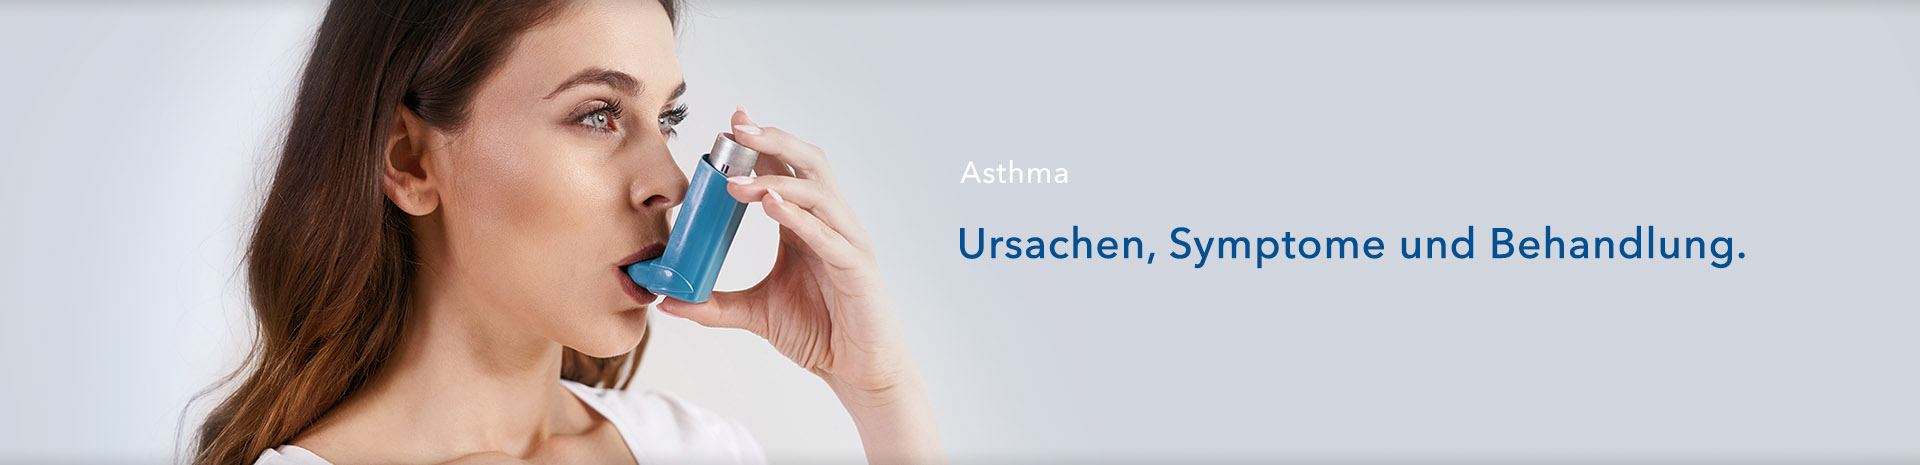 Ratgeber zu Asthma bronchiale